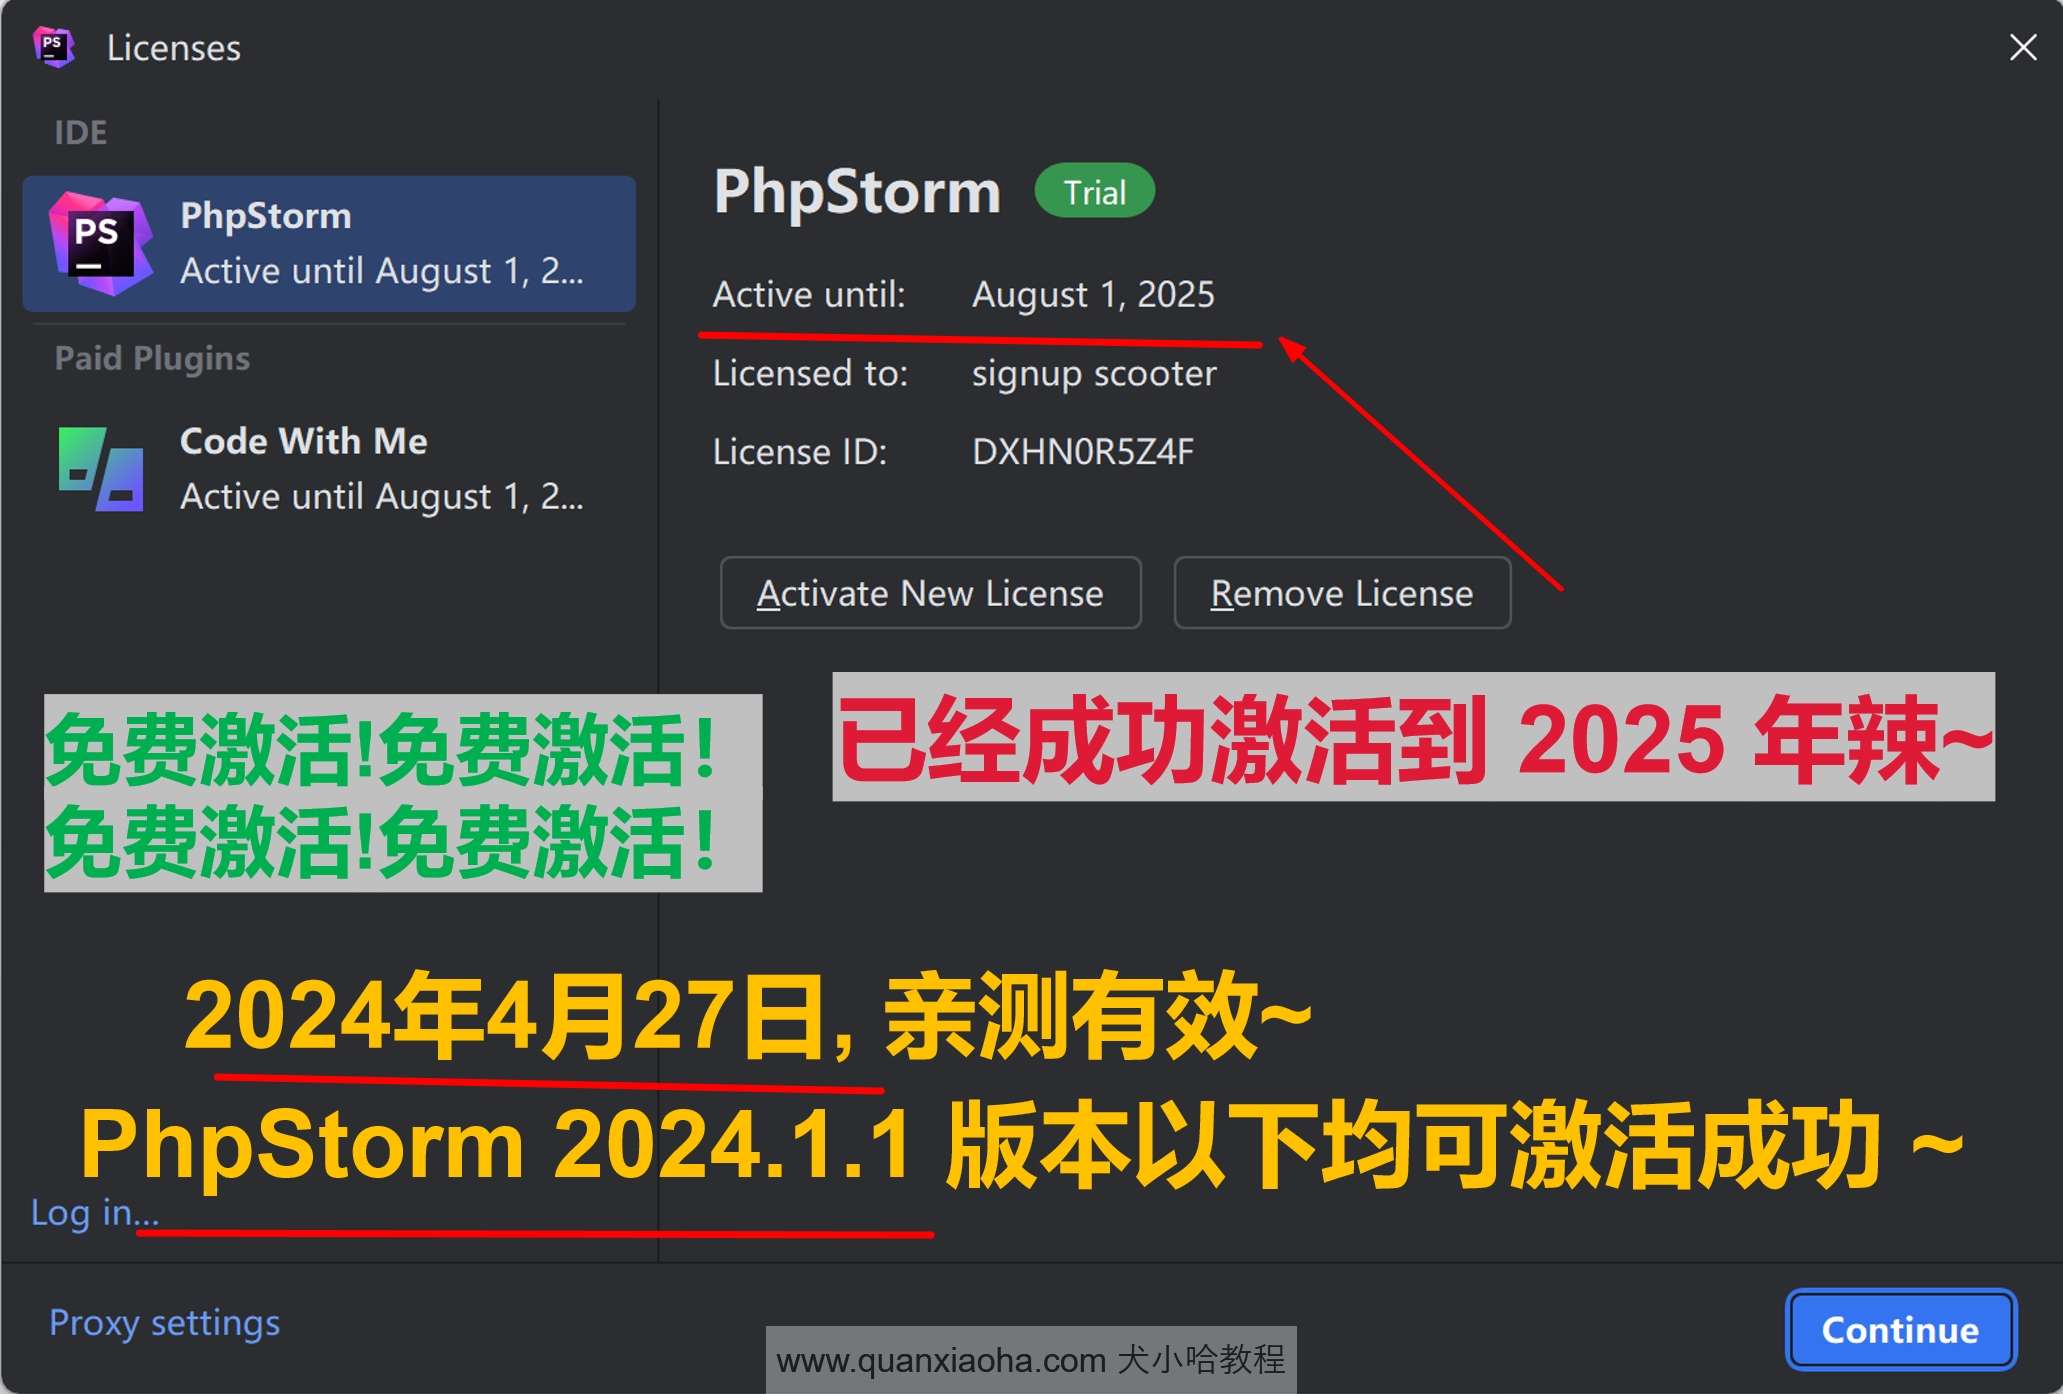 PhpStorm 2024.1.1 成功破解激活截图